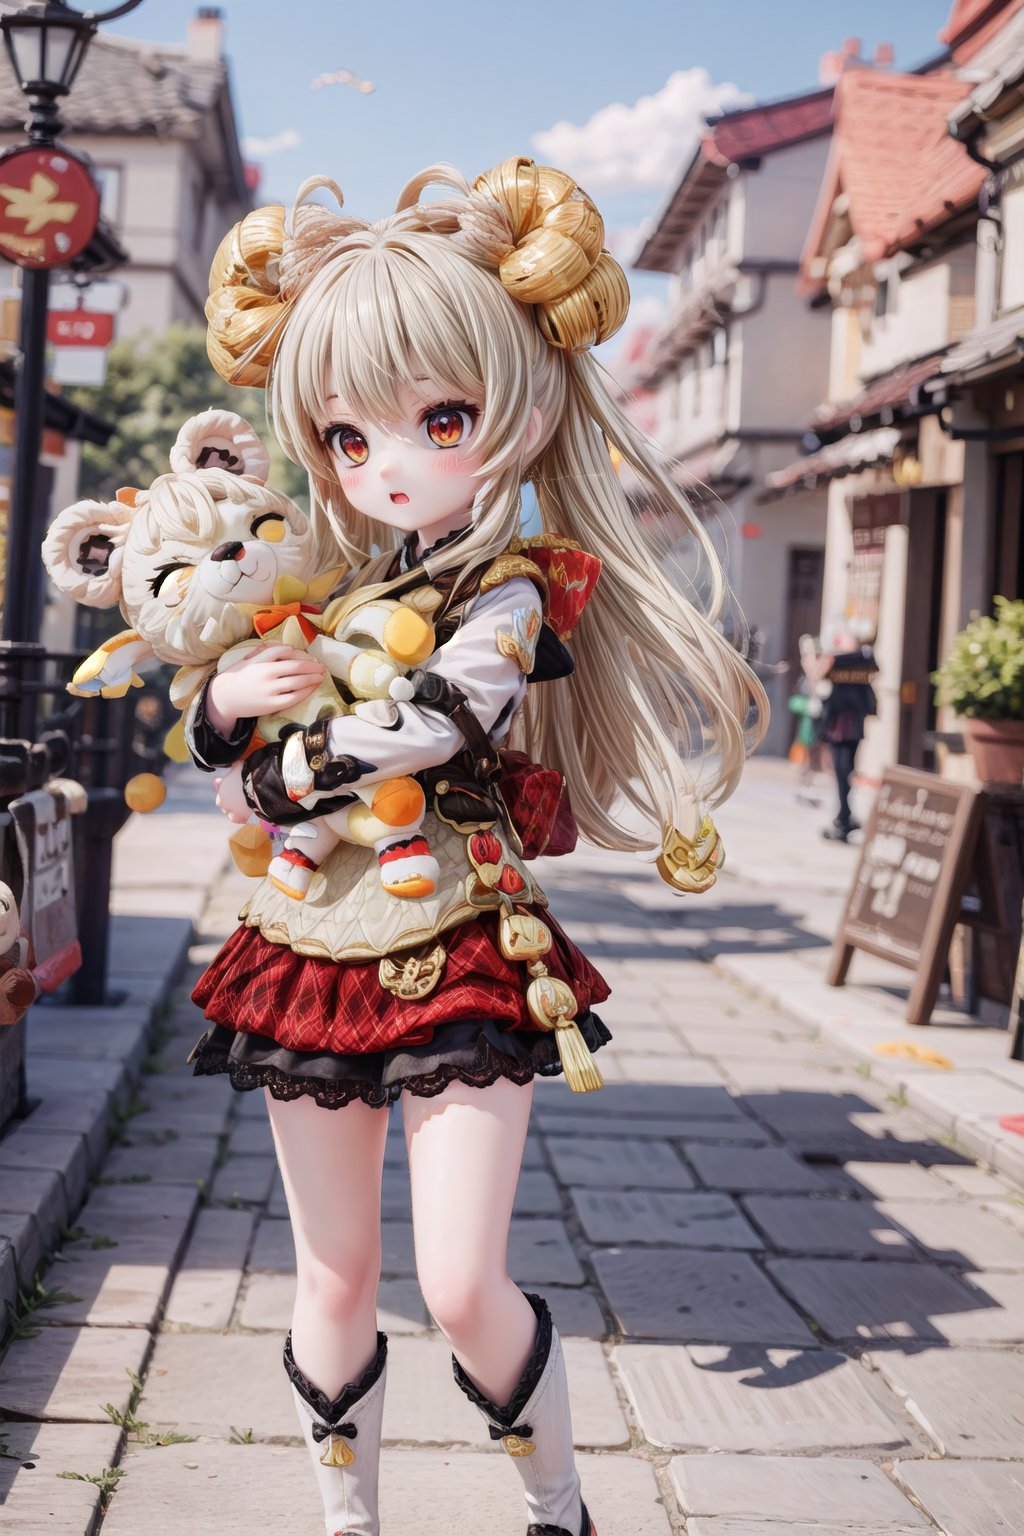 Yaoyao_Impact, full_body, blurry_background, stuffed toy, stuffed animal, loli, holding stuffed animal in 2 hands, outdoor,